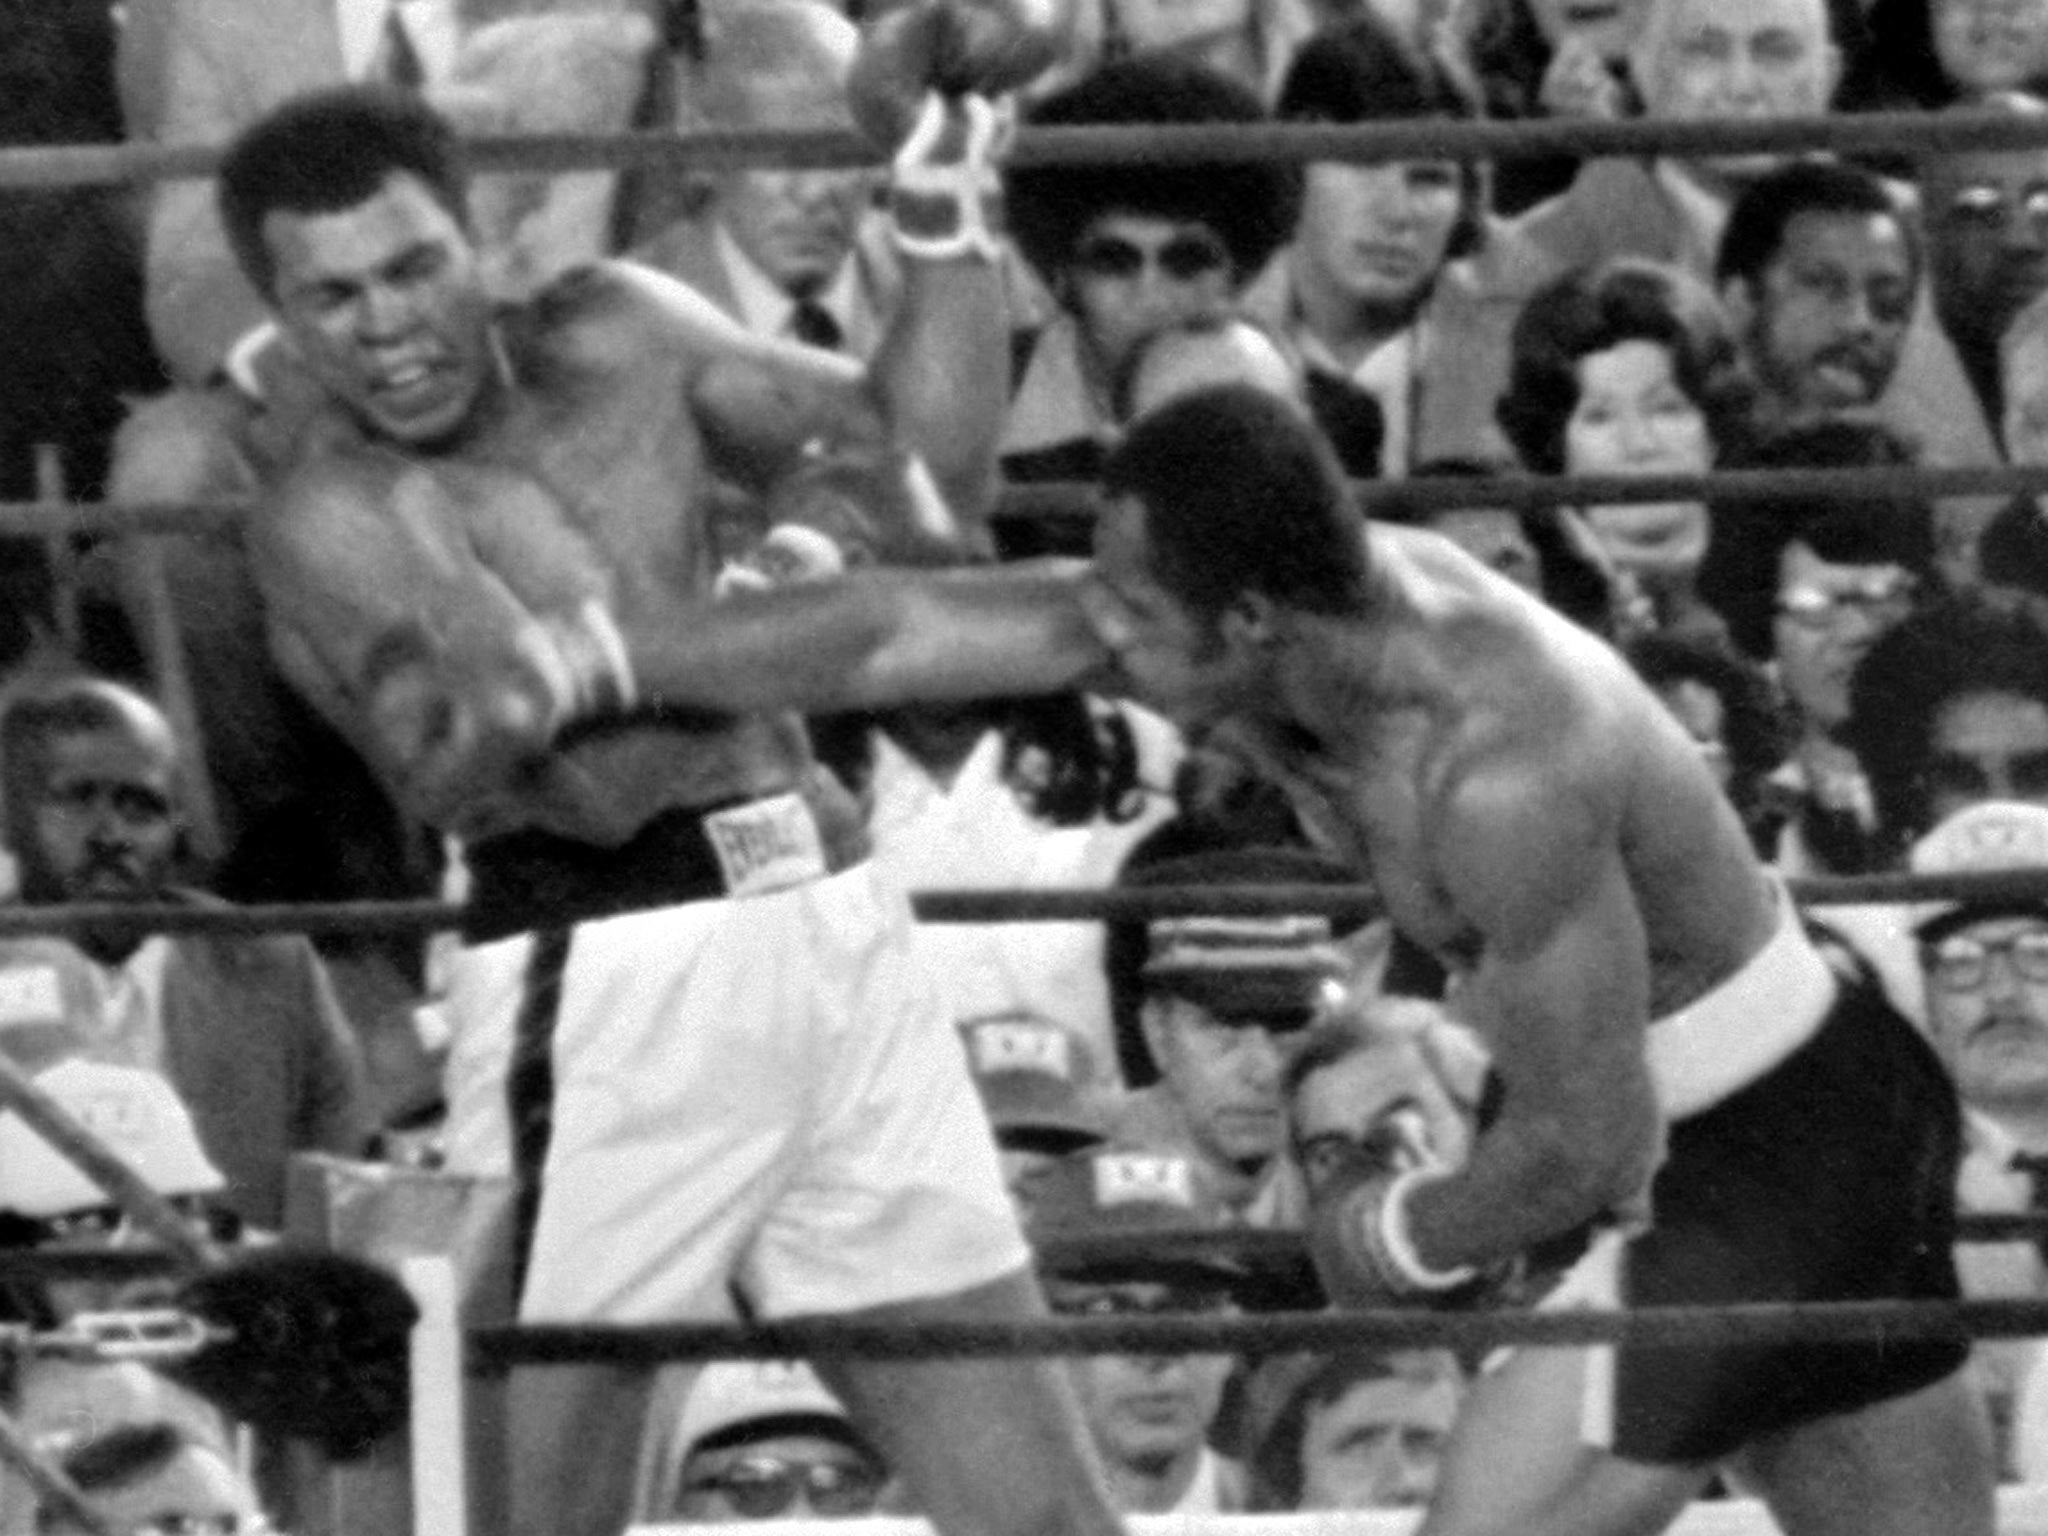 Ken Norton pictured fighting Muhammad Ali in 1976